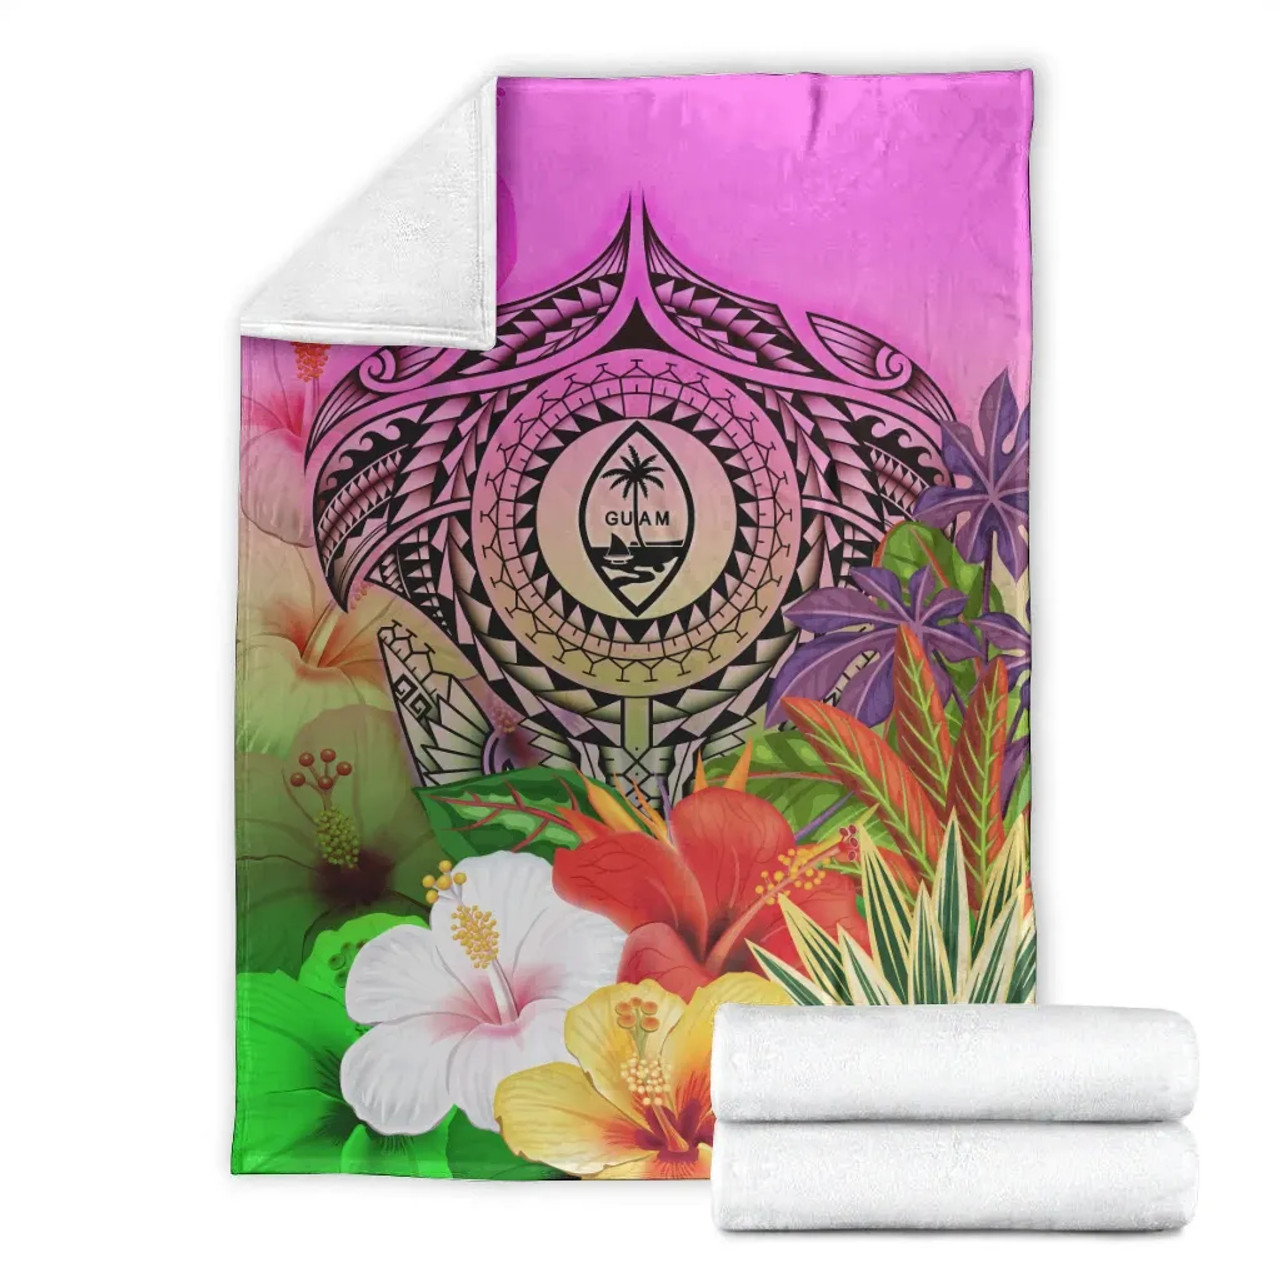 Guam Polynesian Premium Blanket - Manta Ray Tropical Flowers 7